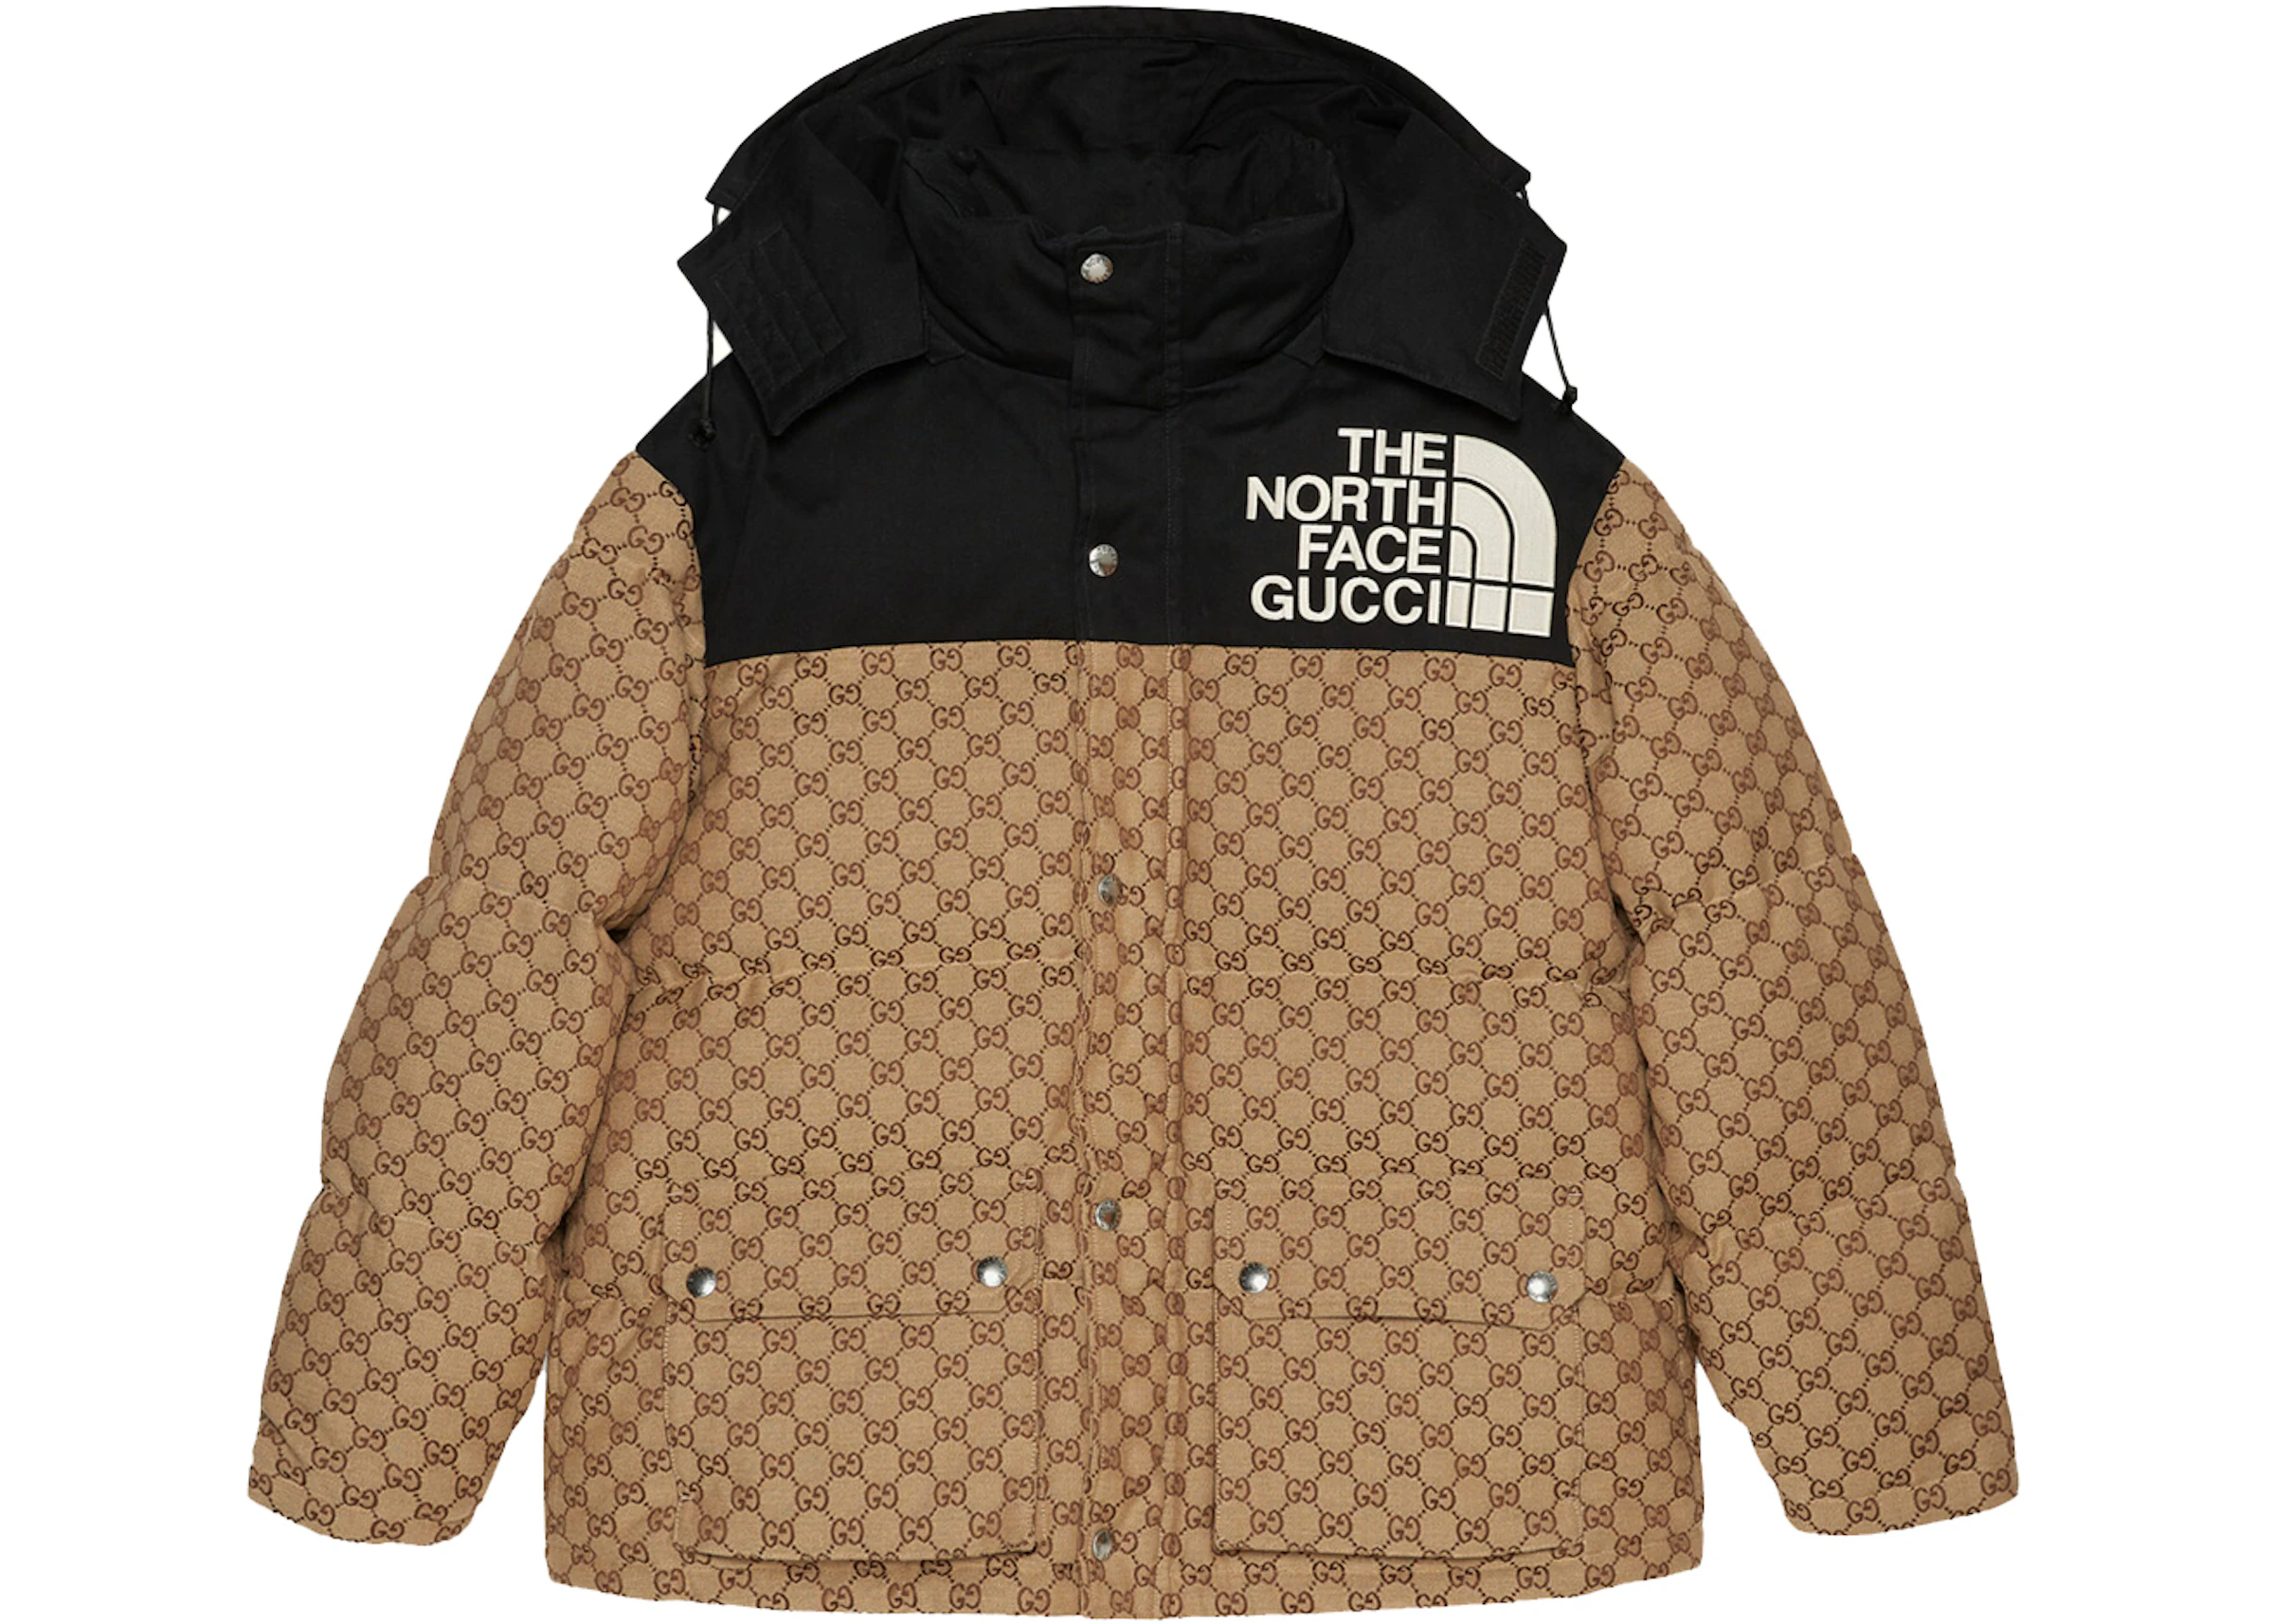 Gucci X The North Face Print Jacket Beige/Ebony 